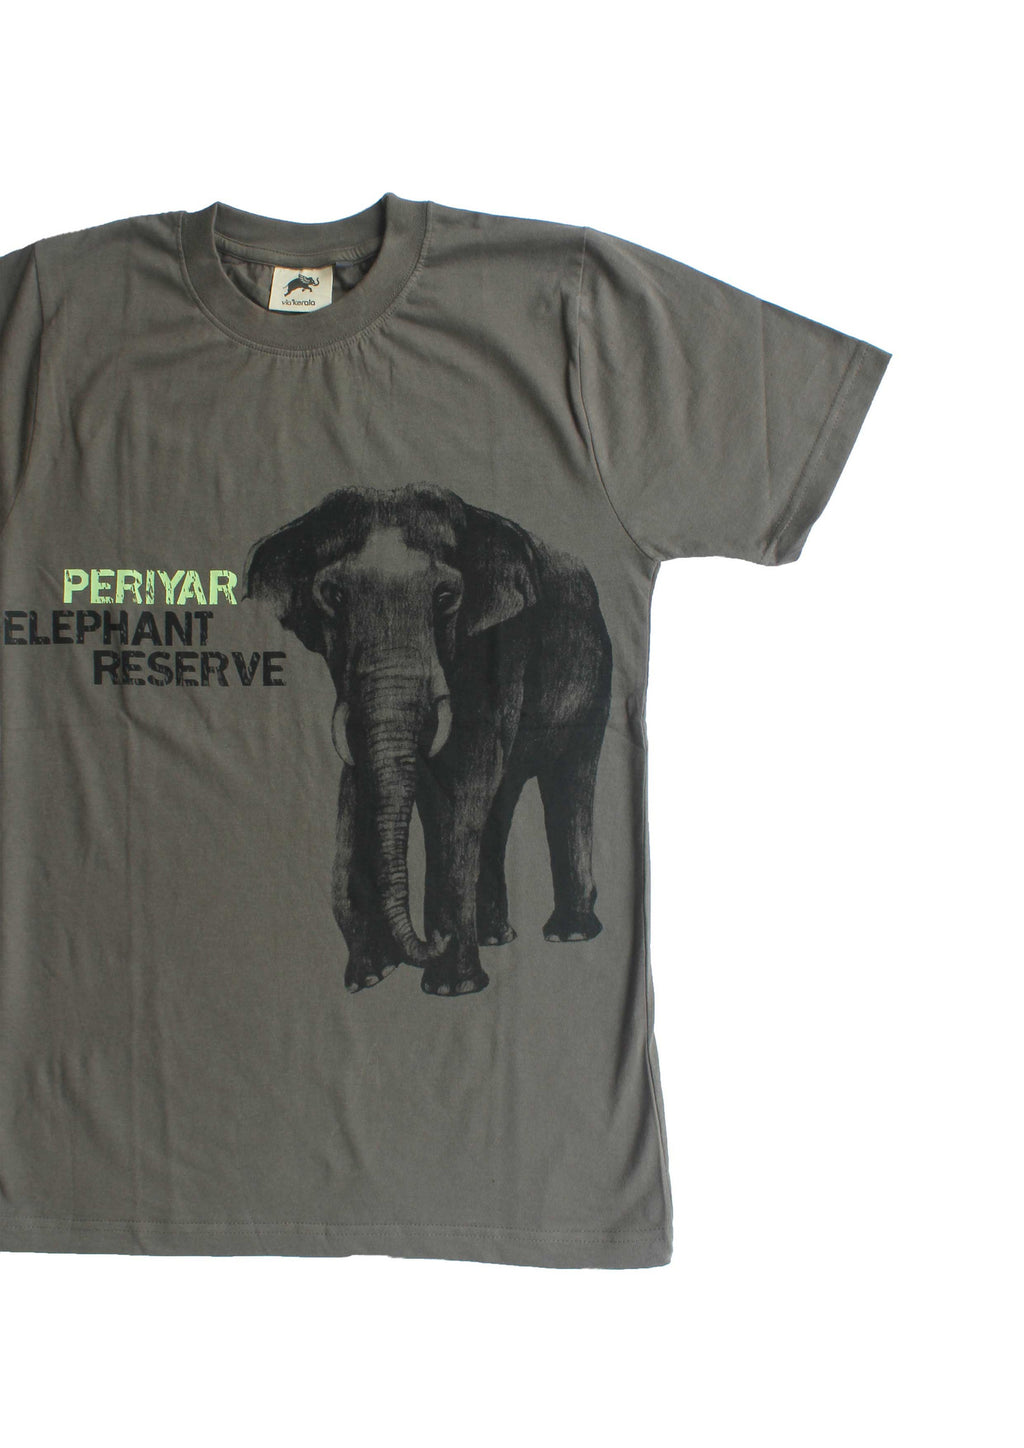 Periyar Elephant Reserve T-shirt